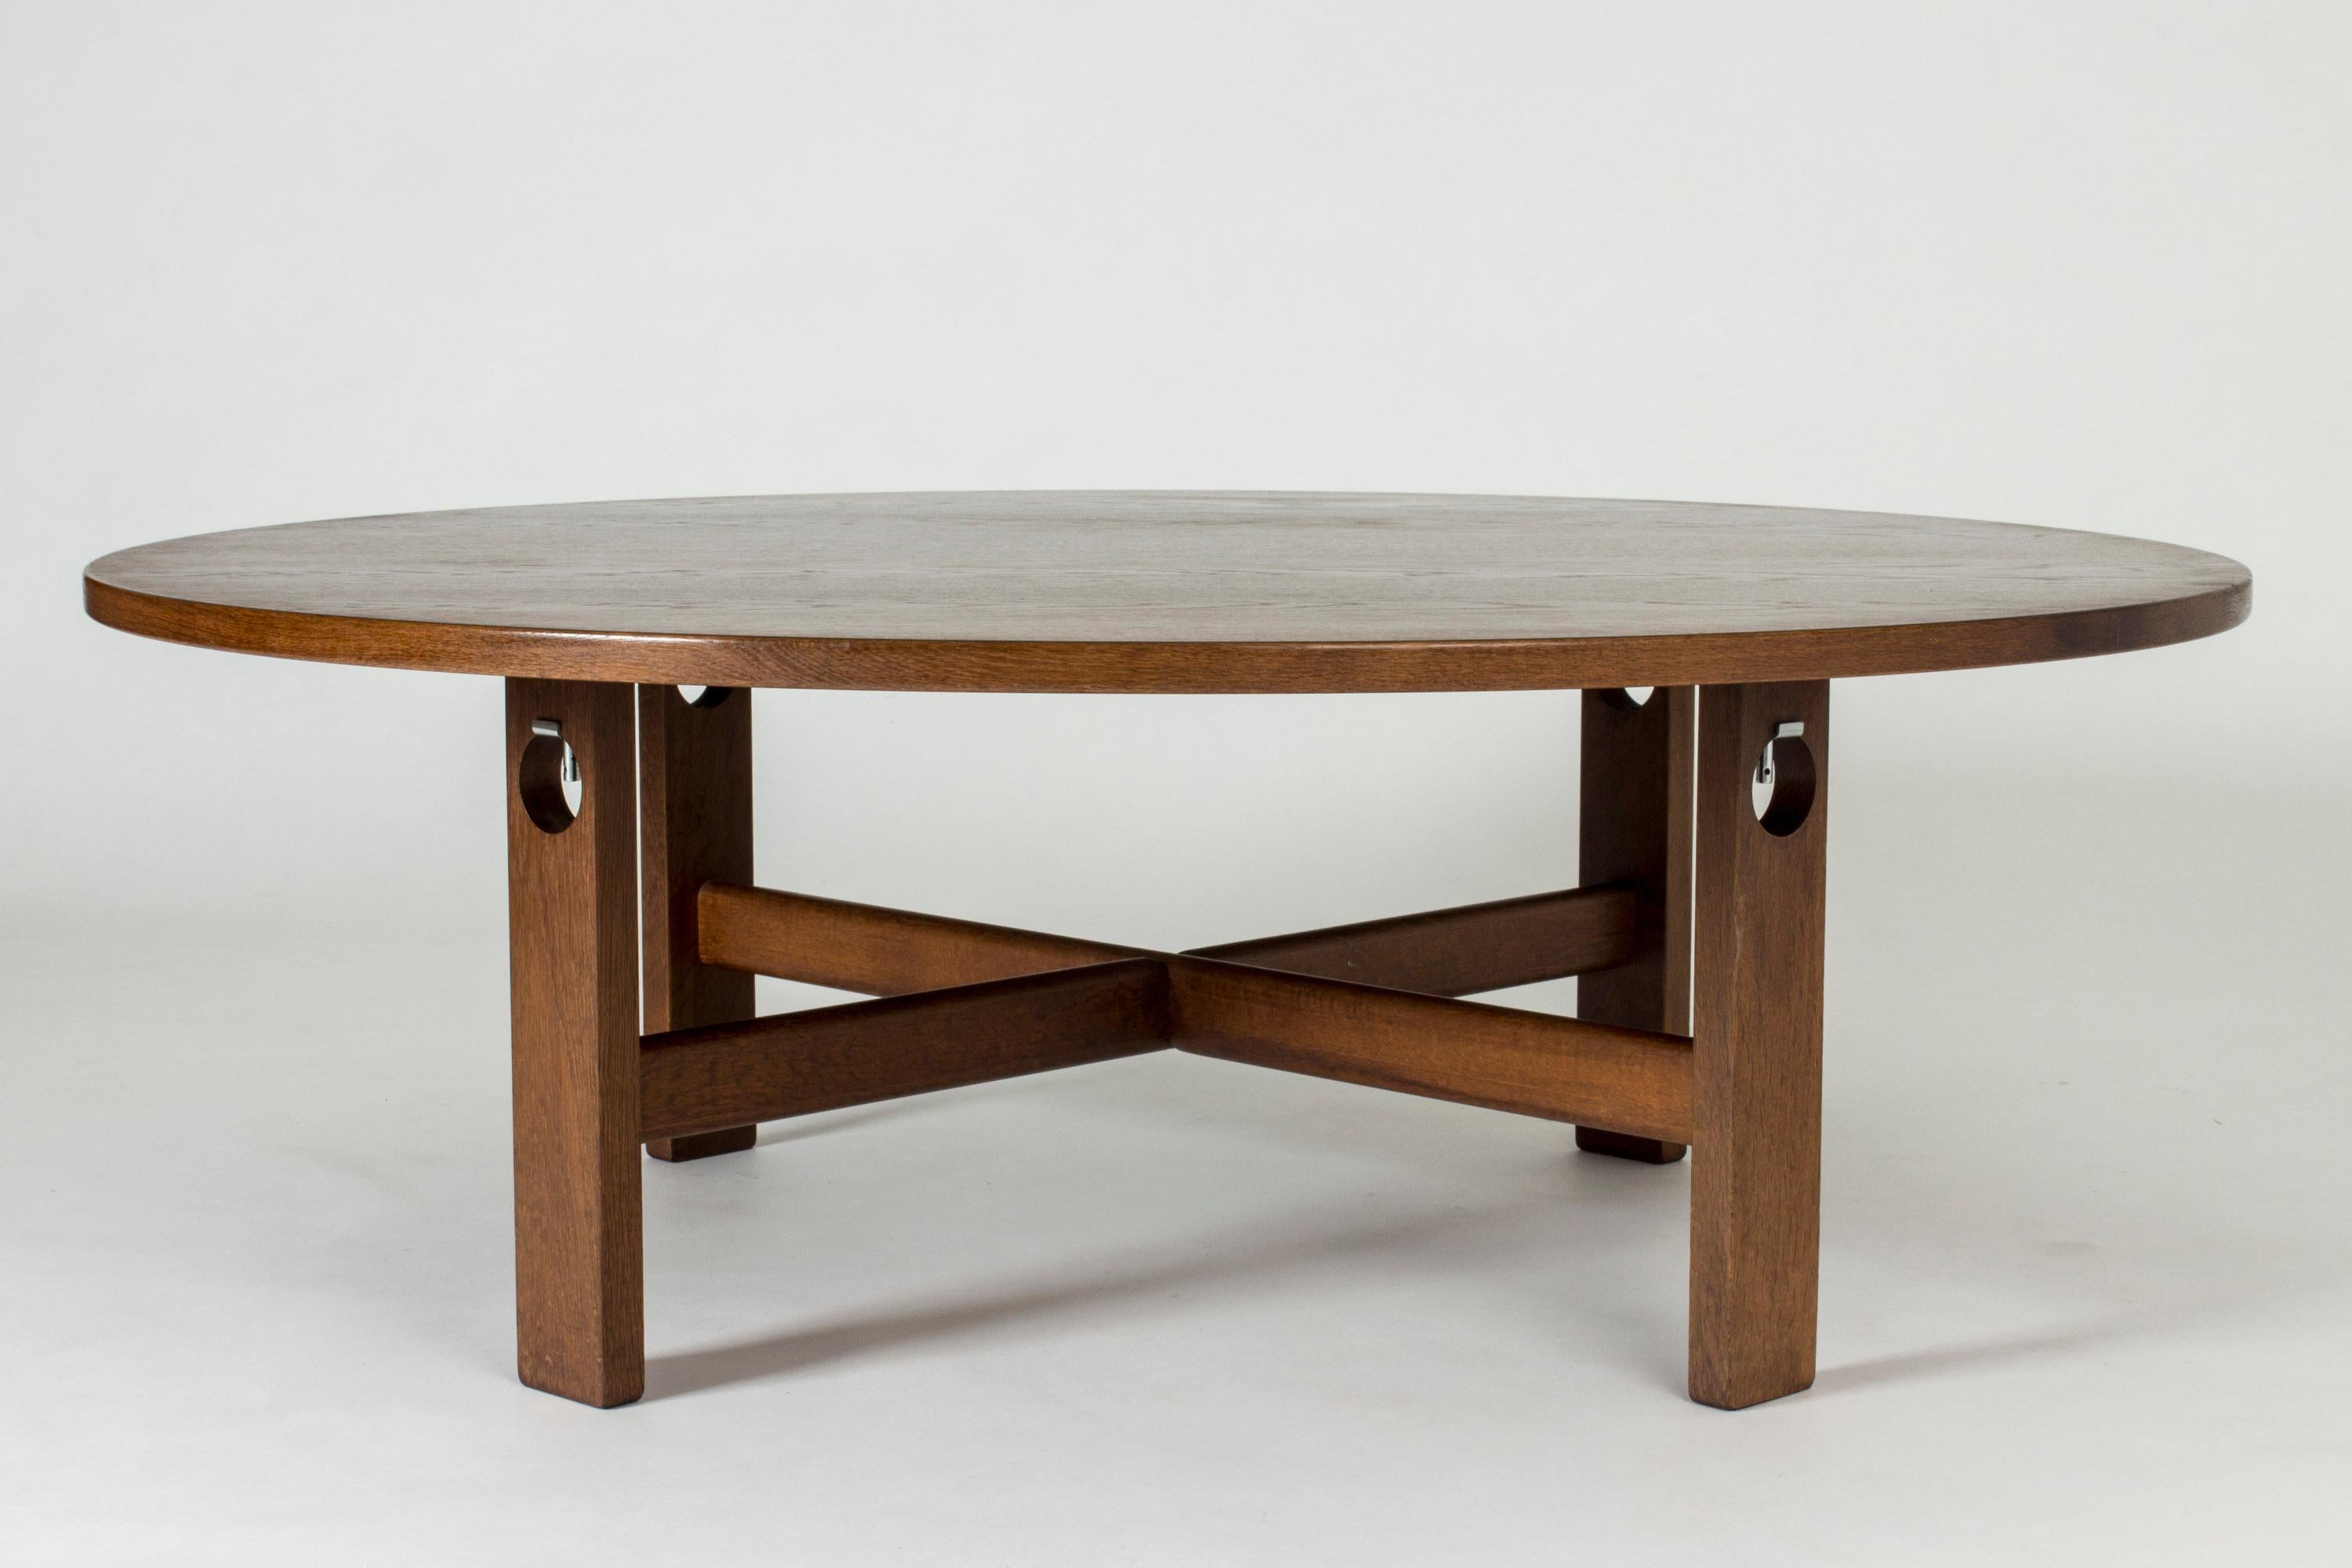 Swedish Stained Oak Coffee Table Designed by Hans J. Wegner for GETAMA, Denmark, 1960s